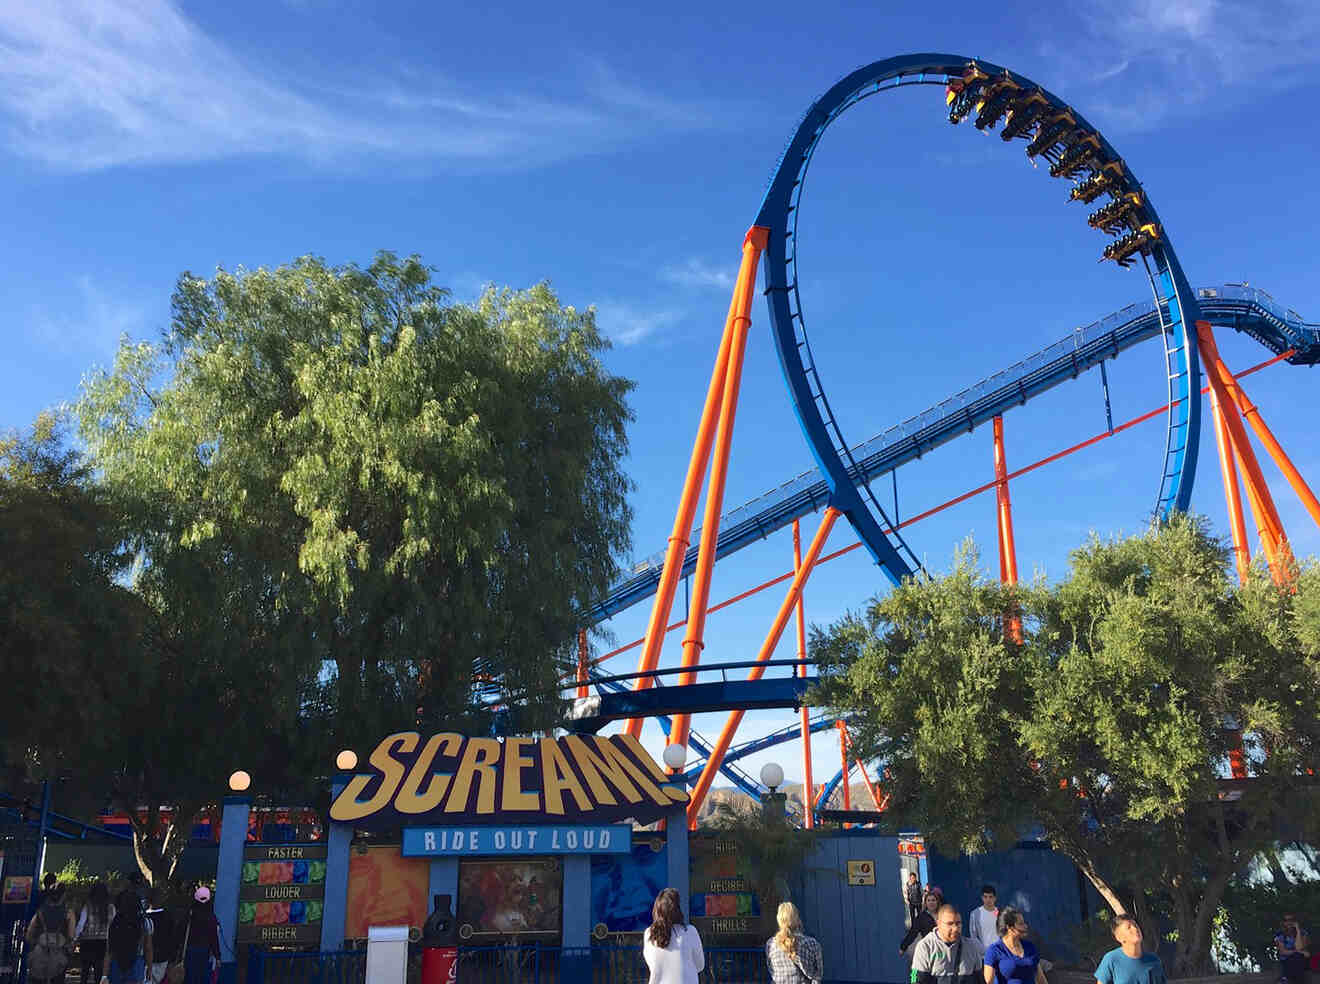 Scream ride at Six Flags Magic Mountain